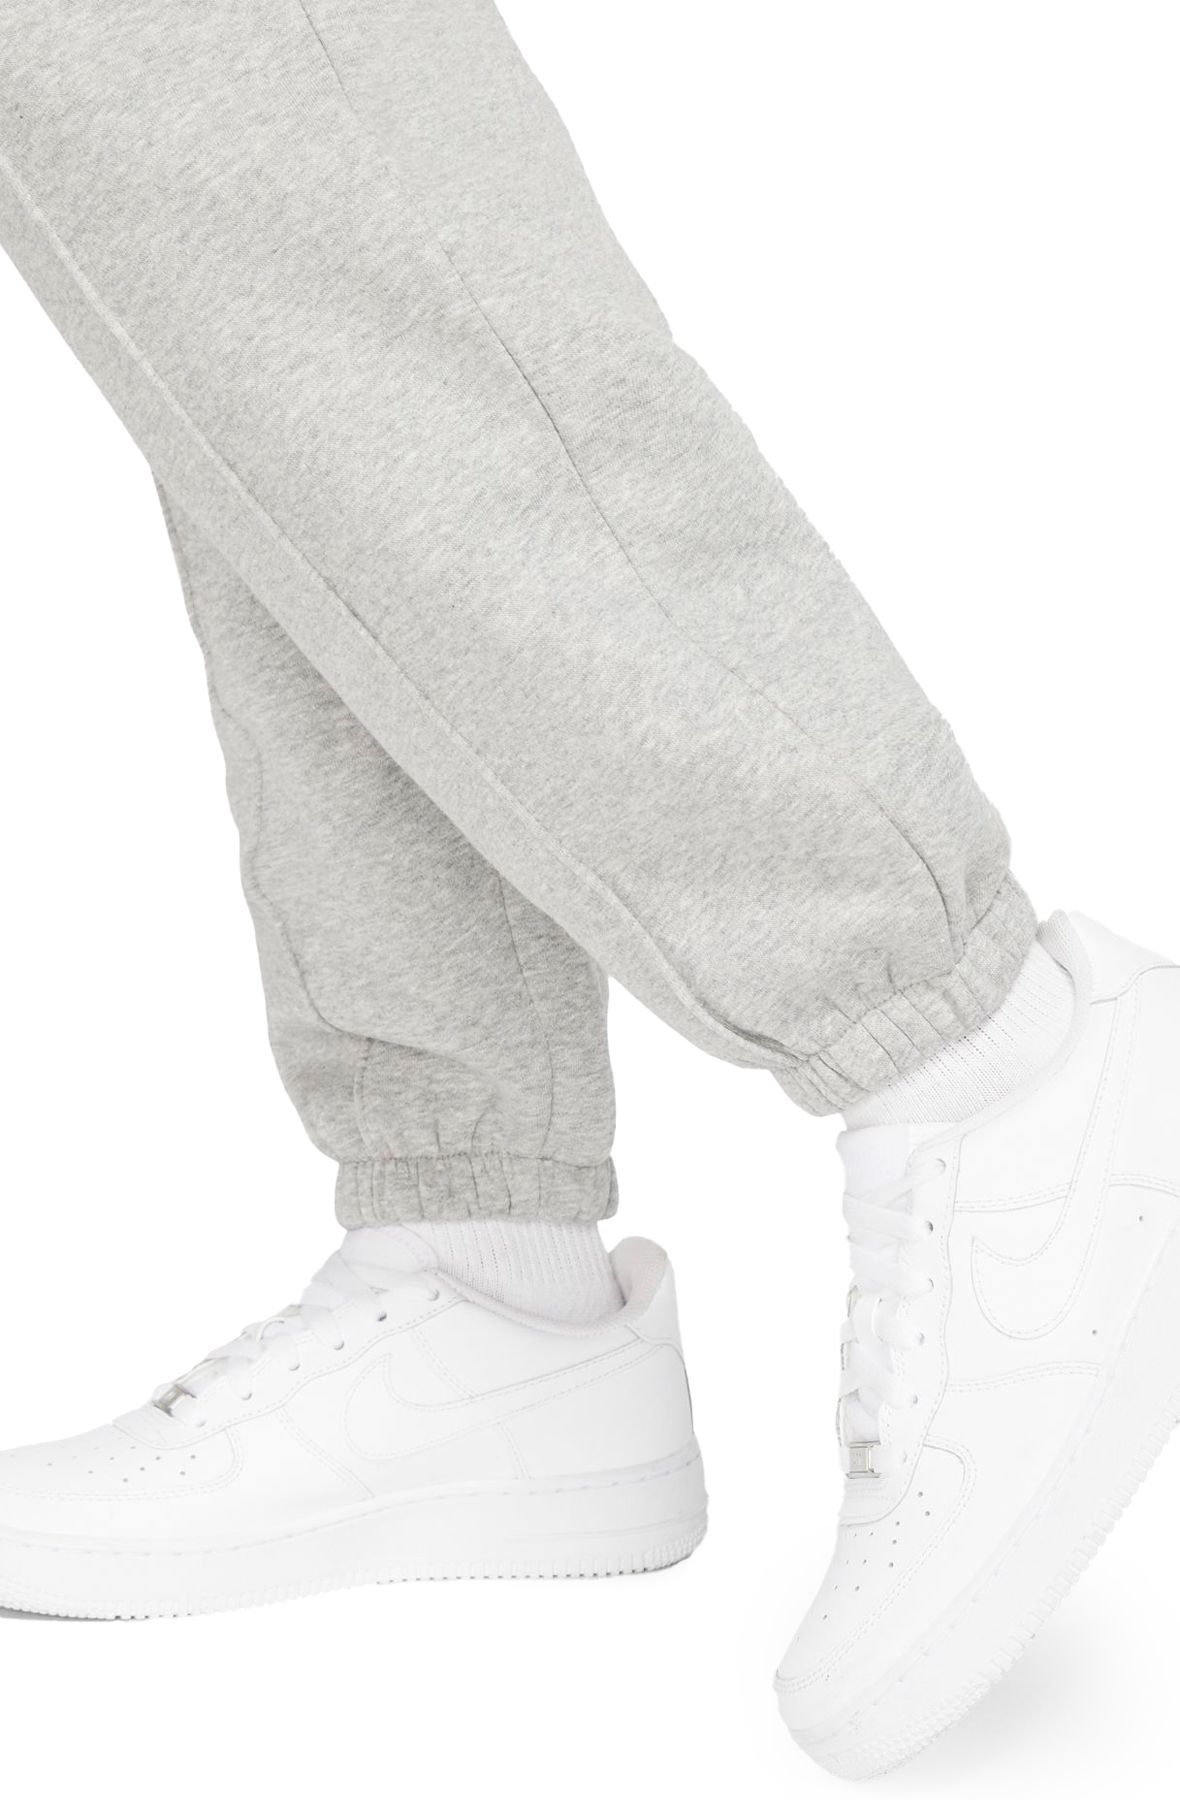 NIKE Sportswear Essential Fleece Pants BV4089 063 - Shiekh